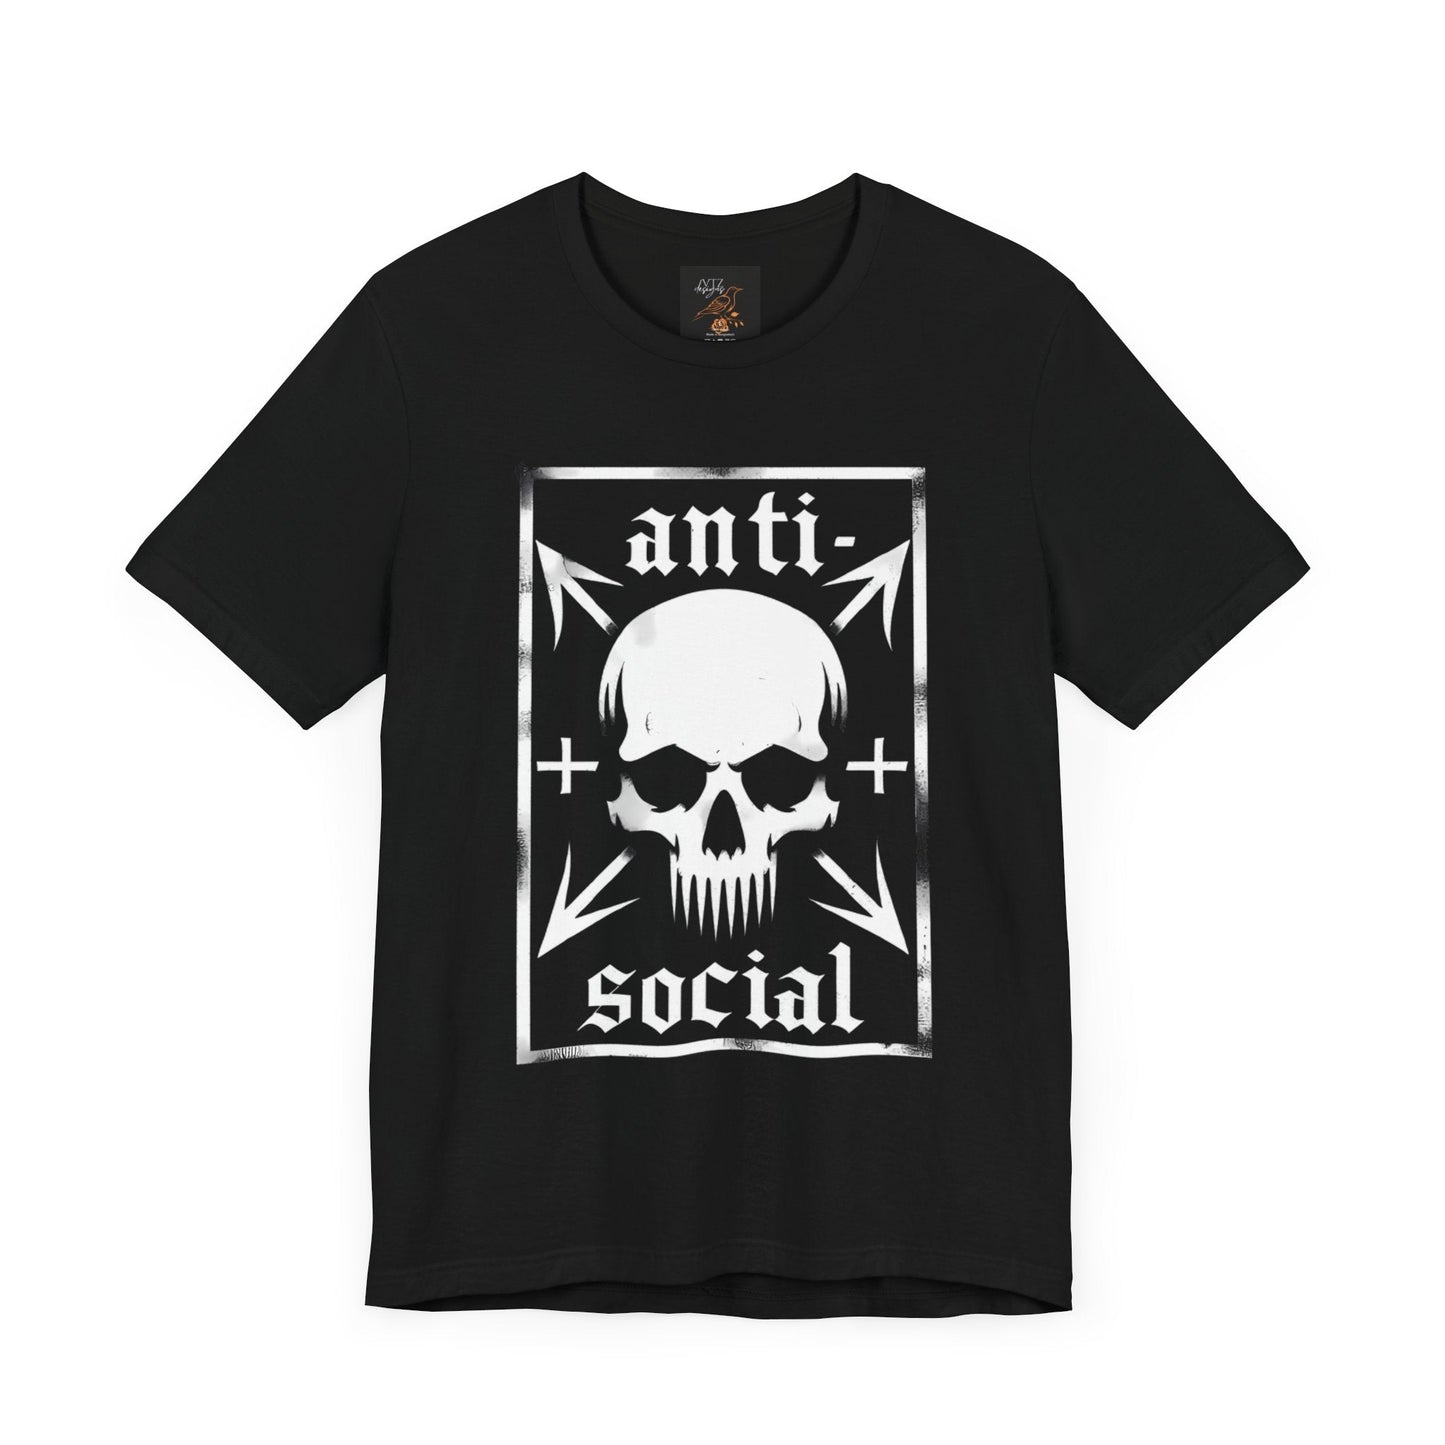 Antisocial Skull Tee ShirtT - ShirtVTZdesignsBlackXSanti socialclothesclothing